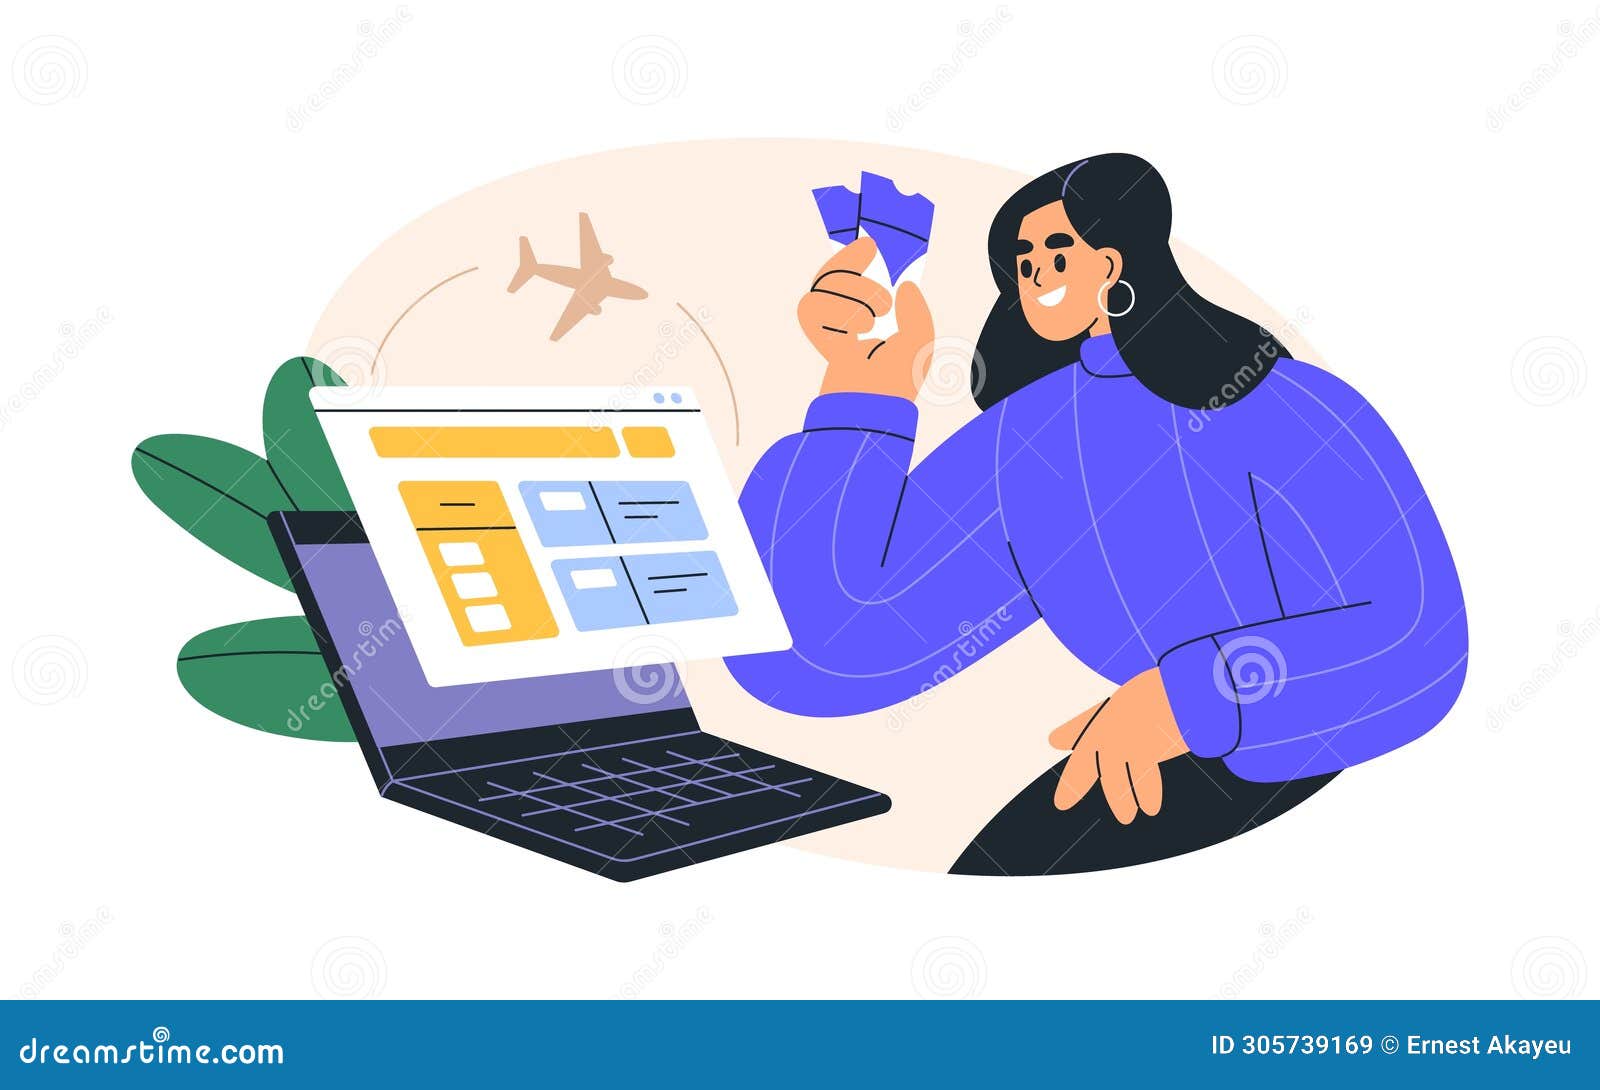 tourist buying air flight tickets online. aircraft, airplane checkin, boarding pass through internet. woman booking